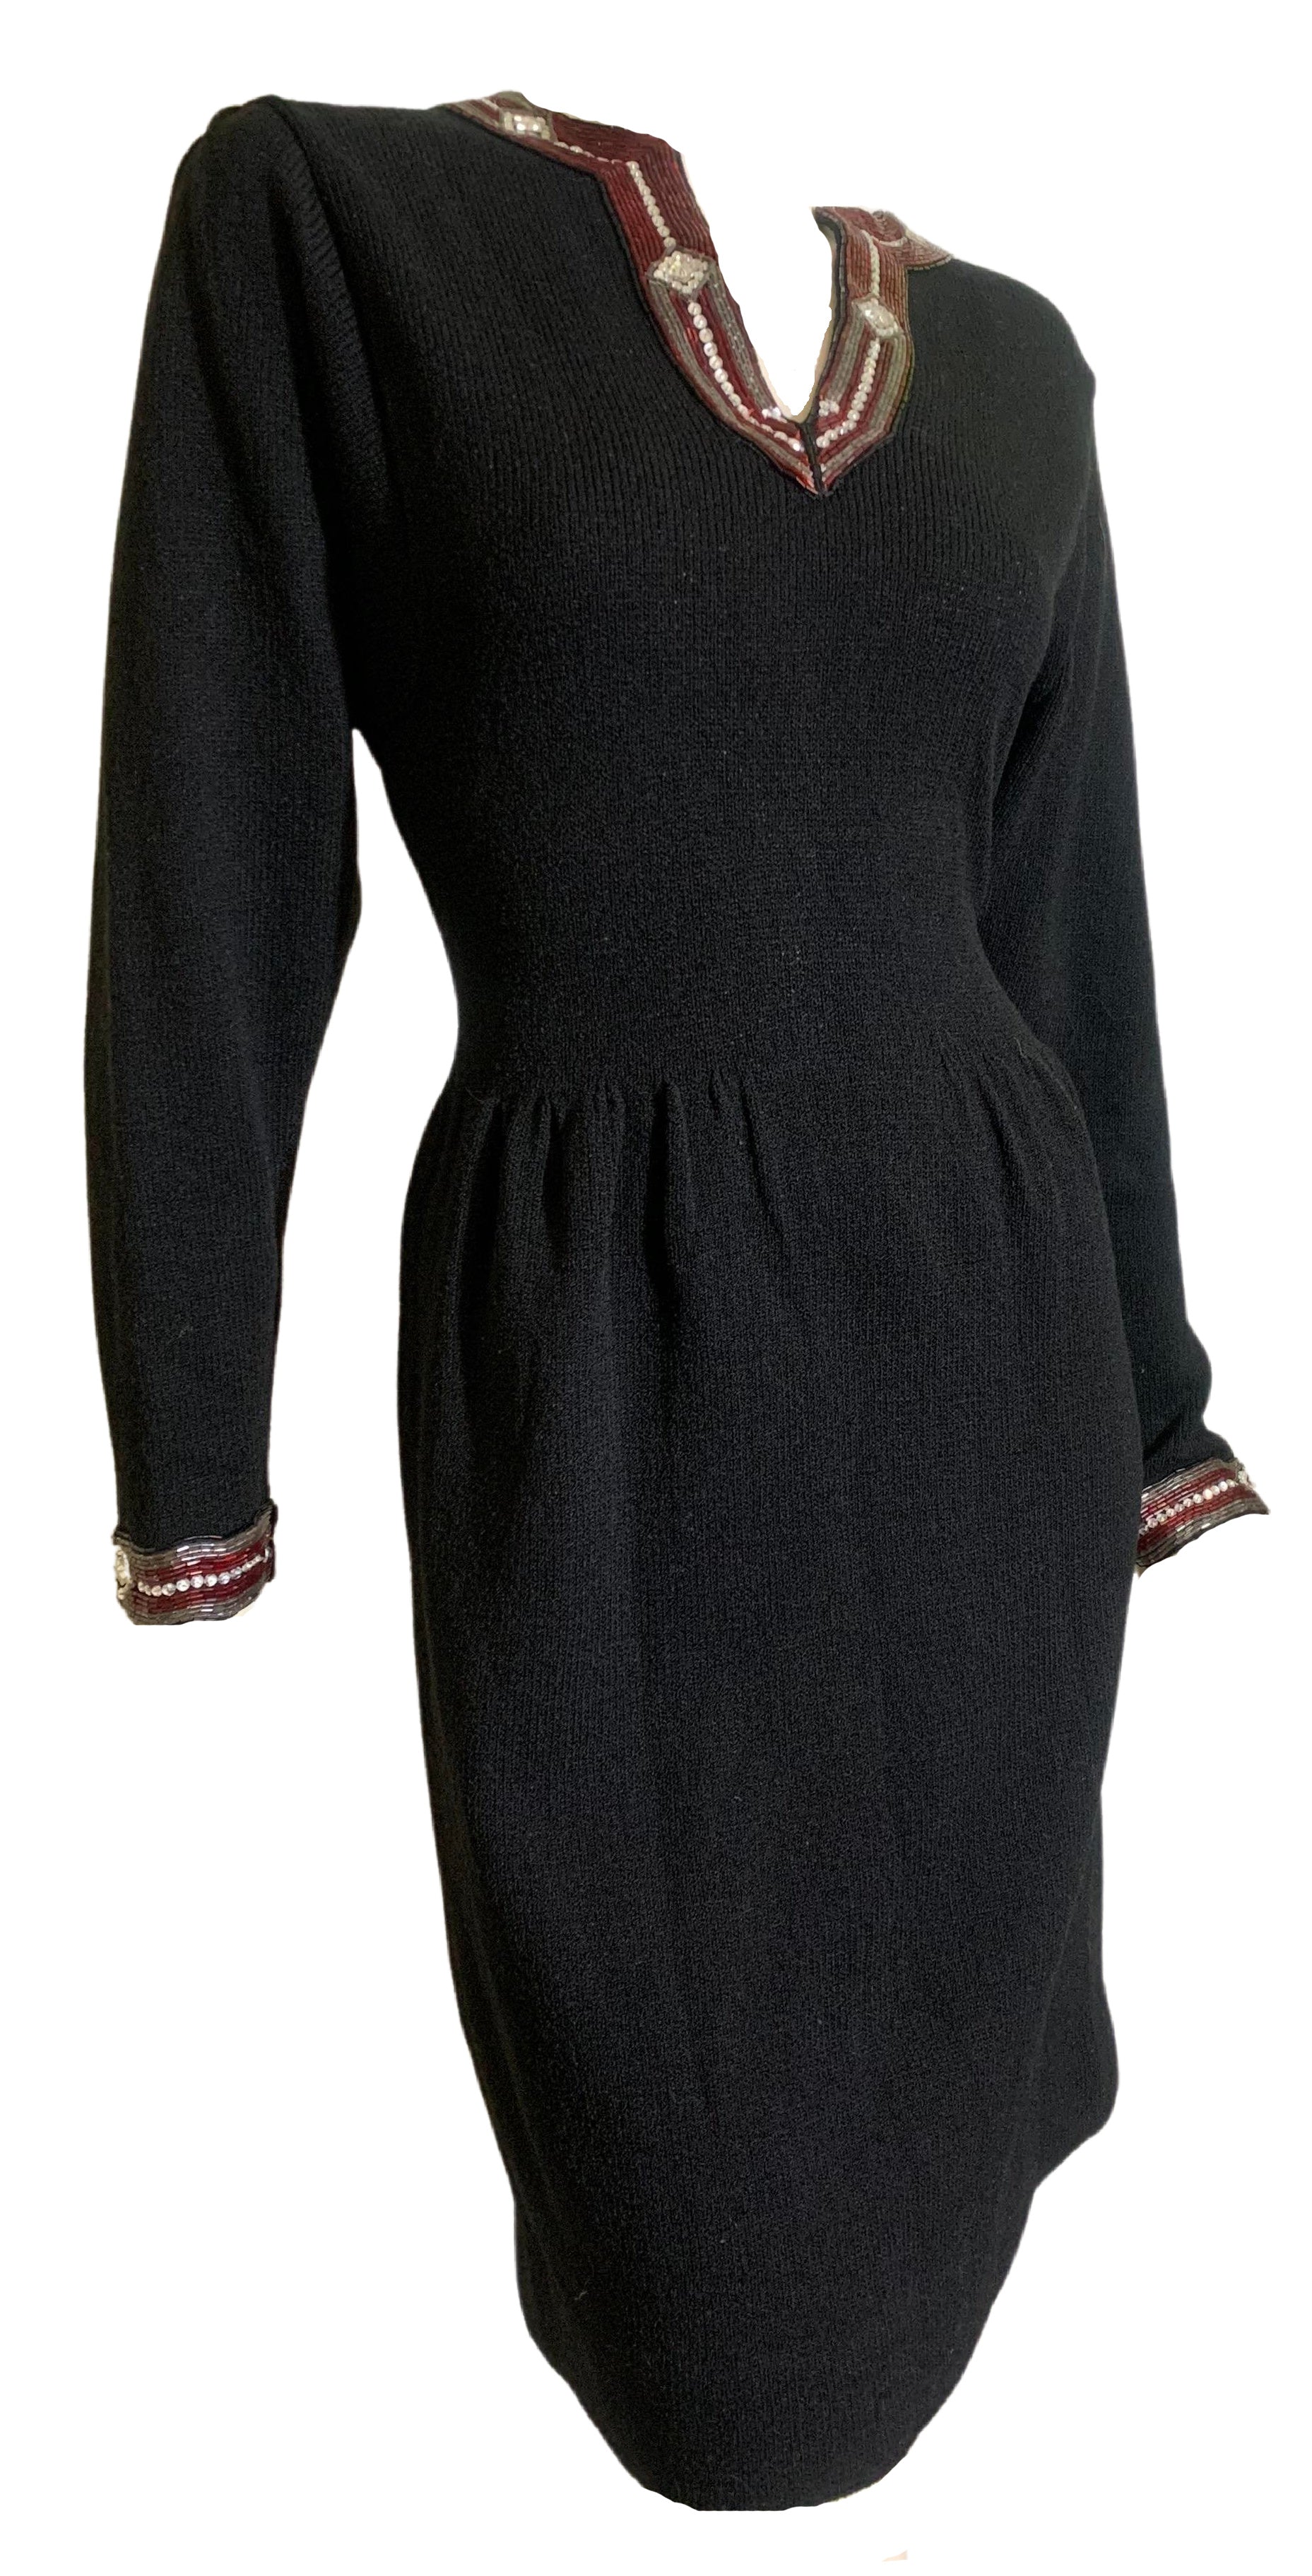 Bead and Rhinestone Trimmed Santana Knit Black Dress circa 1980s –  Dorothea's Closet Vintage